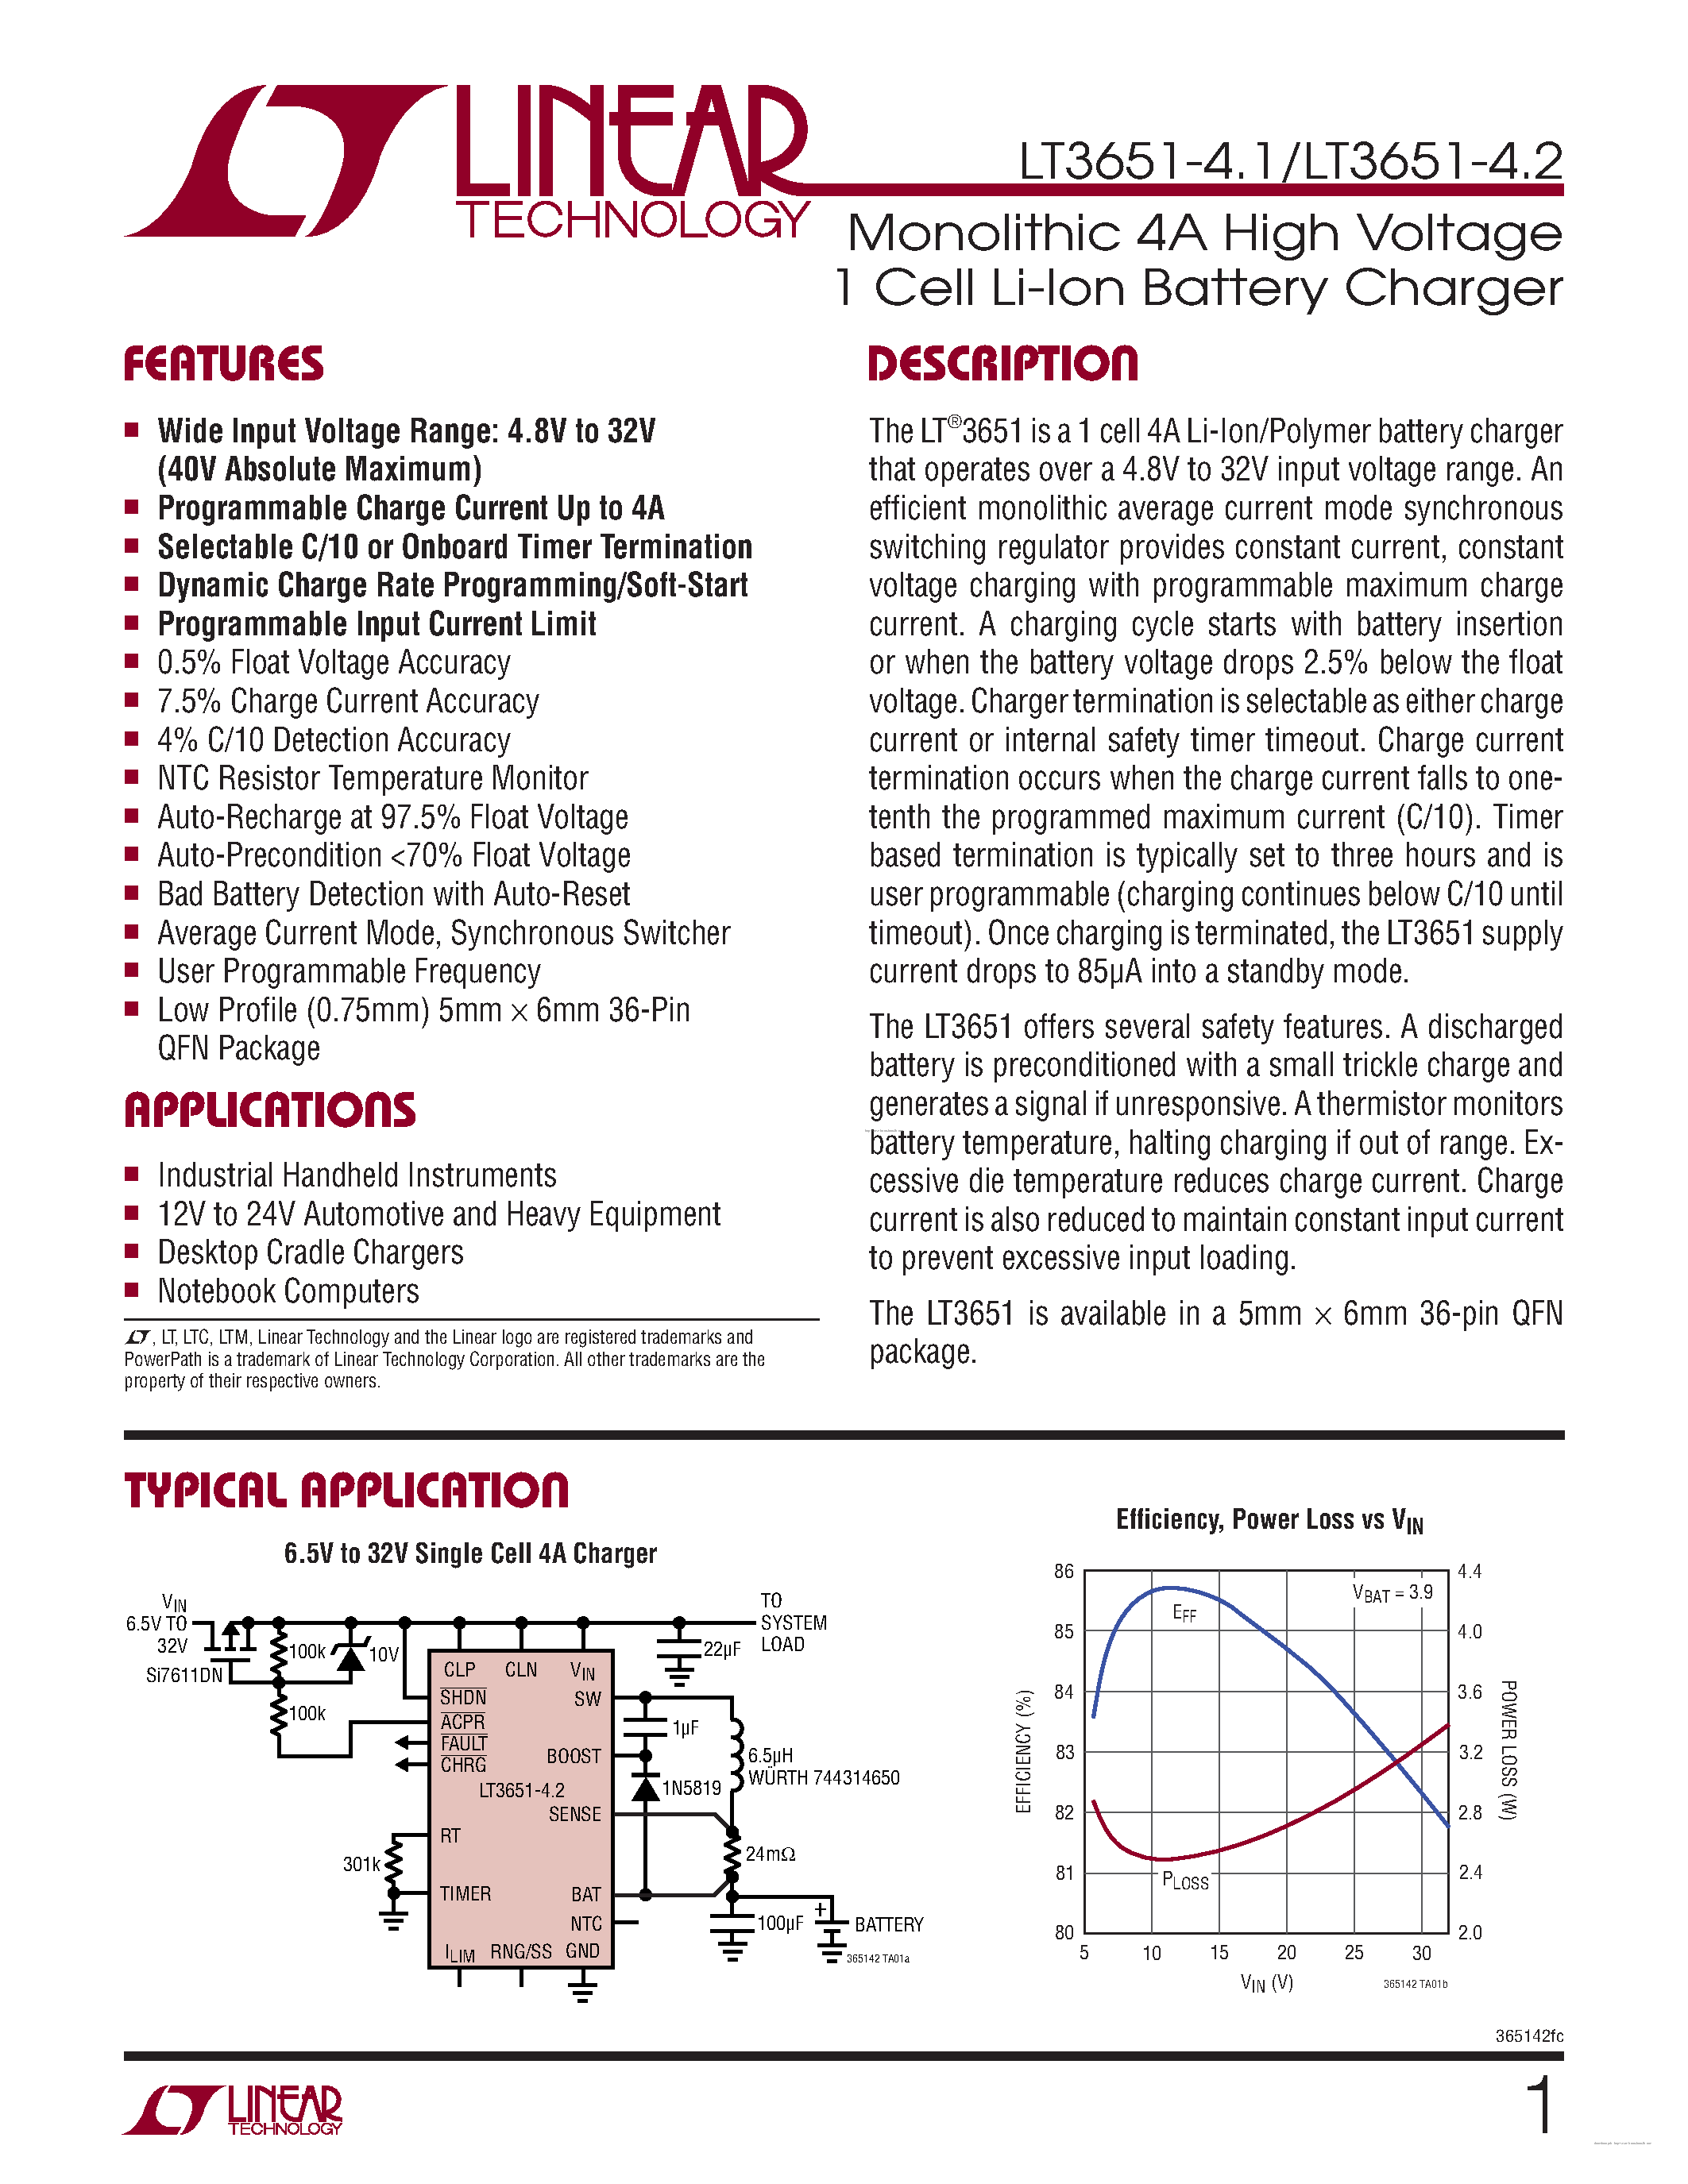 Даташит LT3651-4.1 - (LT3651-4.1 / LT3651-4.2) Monolithic 4A High Voltage Li-Ion Battery Charger страница 1